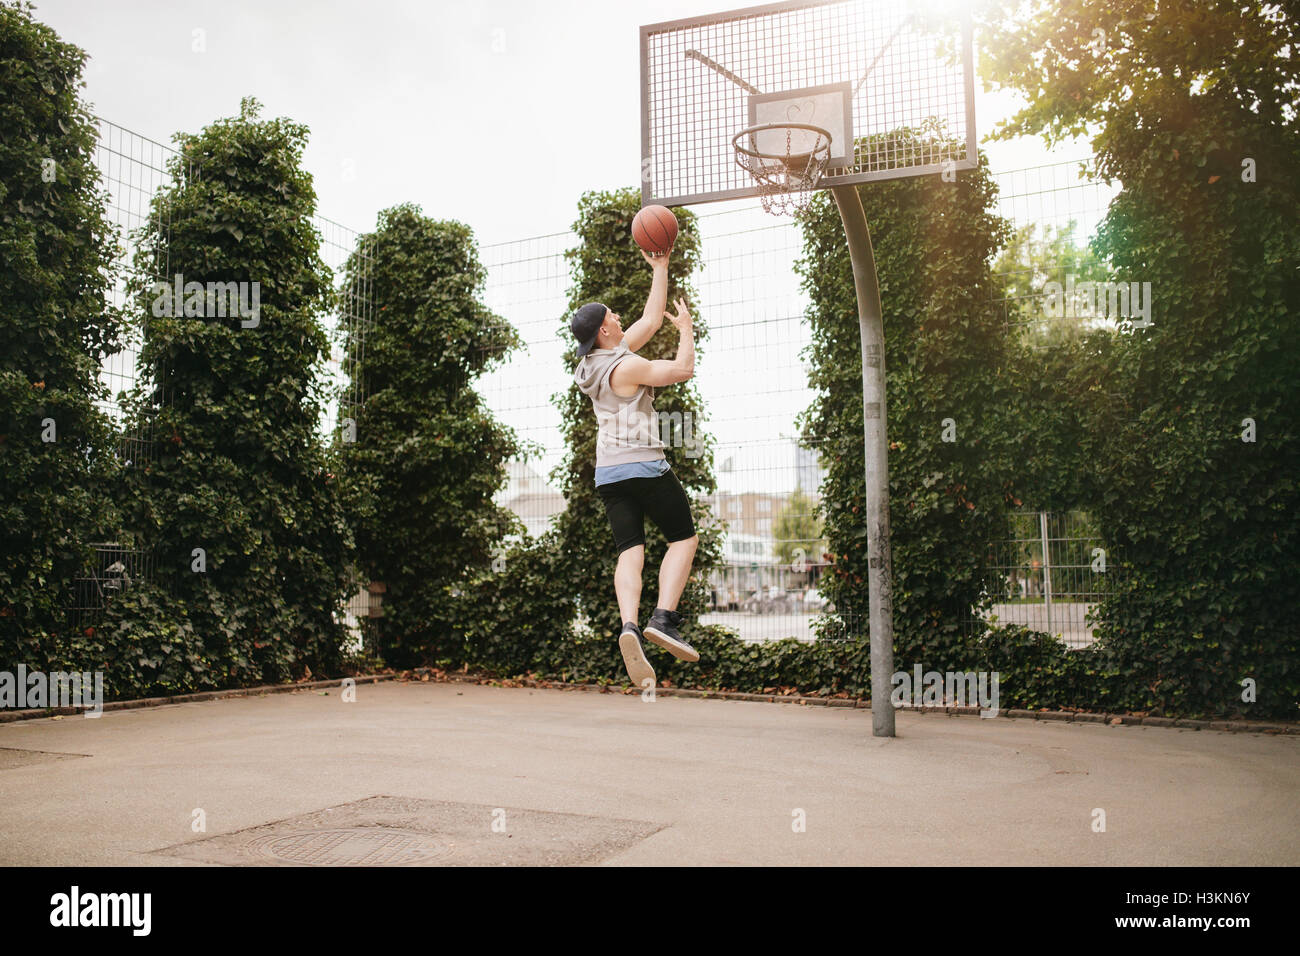 Junger Mann springen und Dunks Basketball in Reifen. Teenager Kerl spielt Streetball. Stockfoto